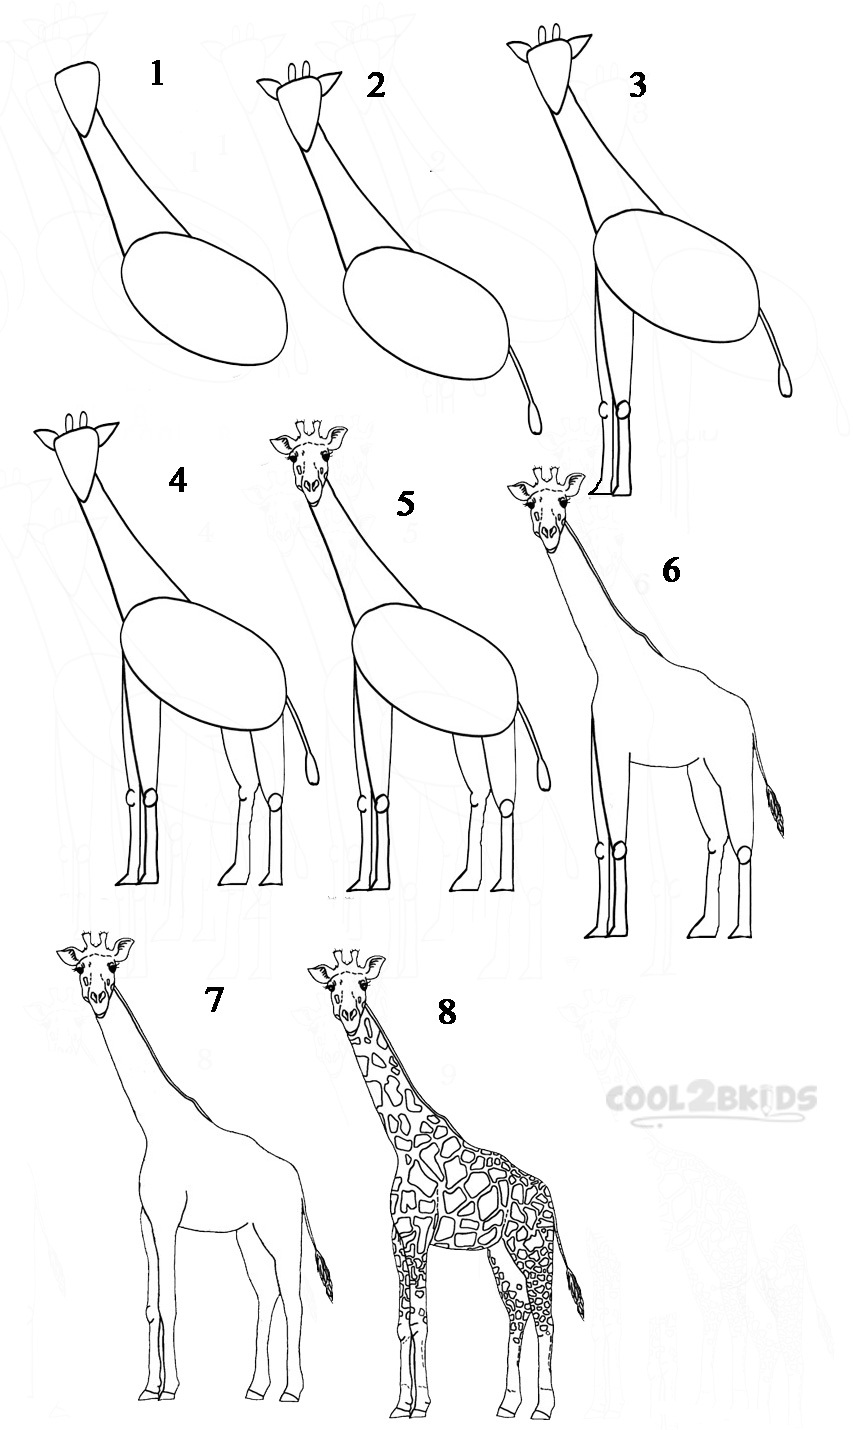  Giraffe Sketch How To Draw for Beginner